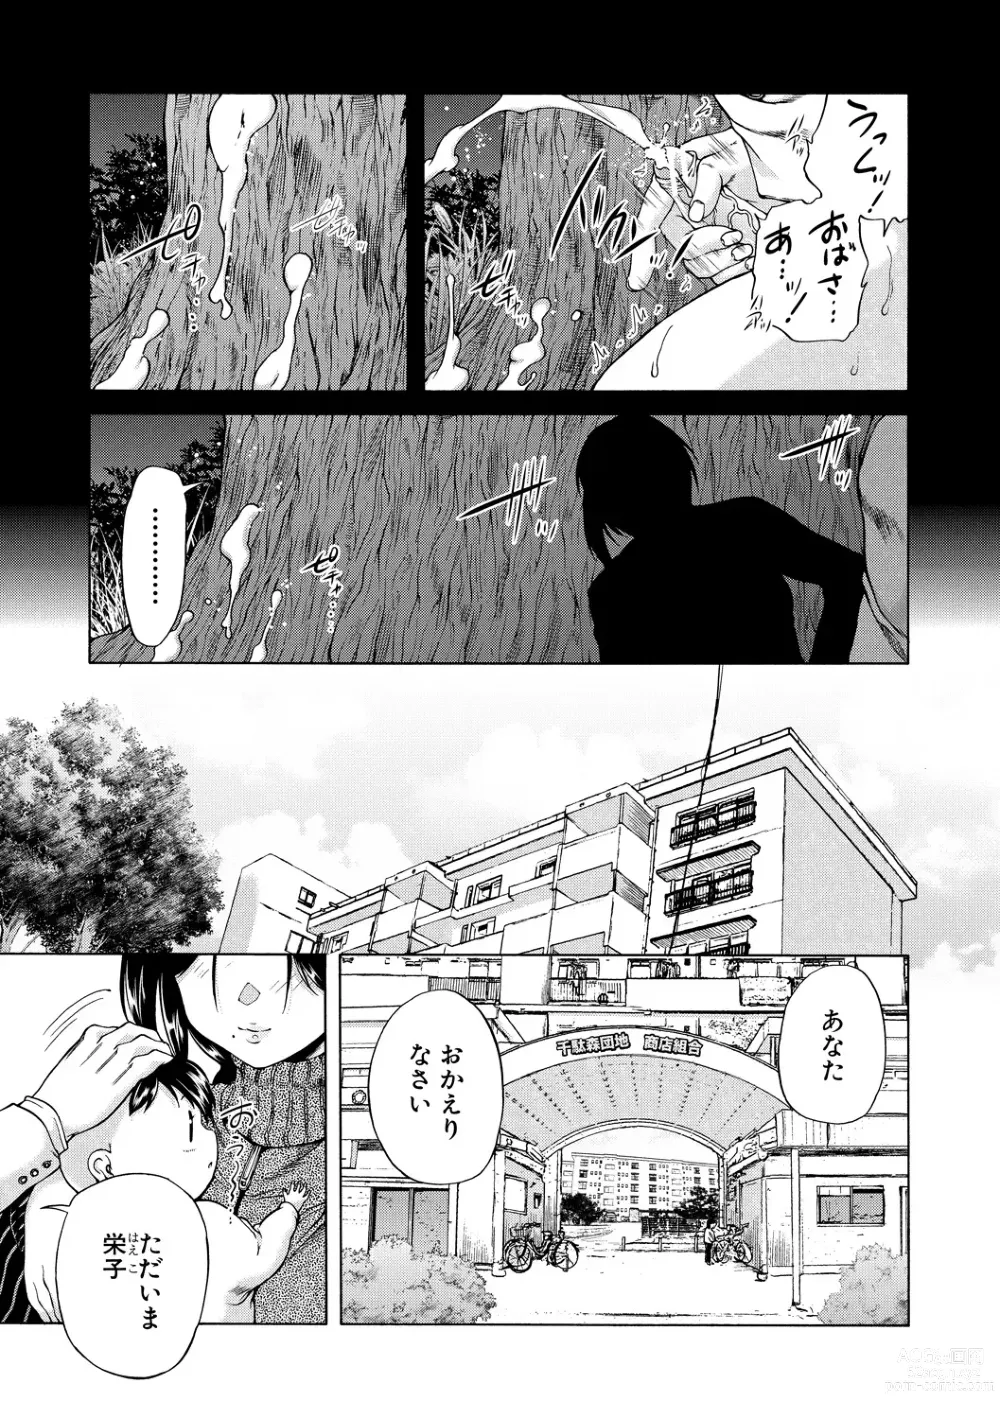 Page 5 of manga Maou Tensei Harem - Devil Reincarnation